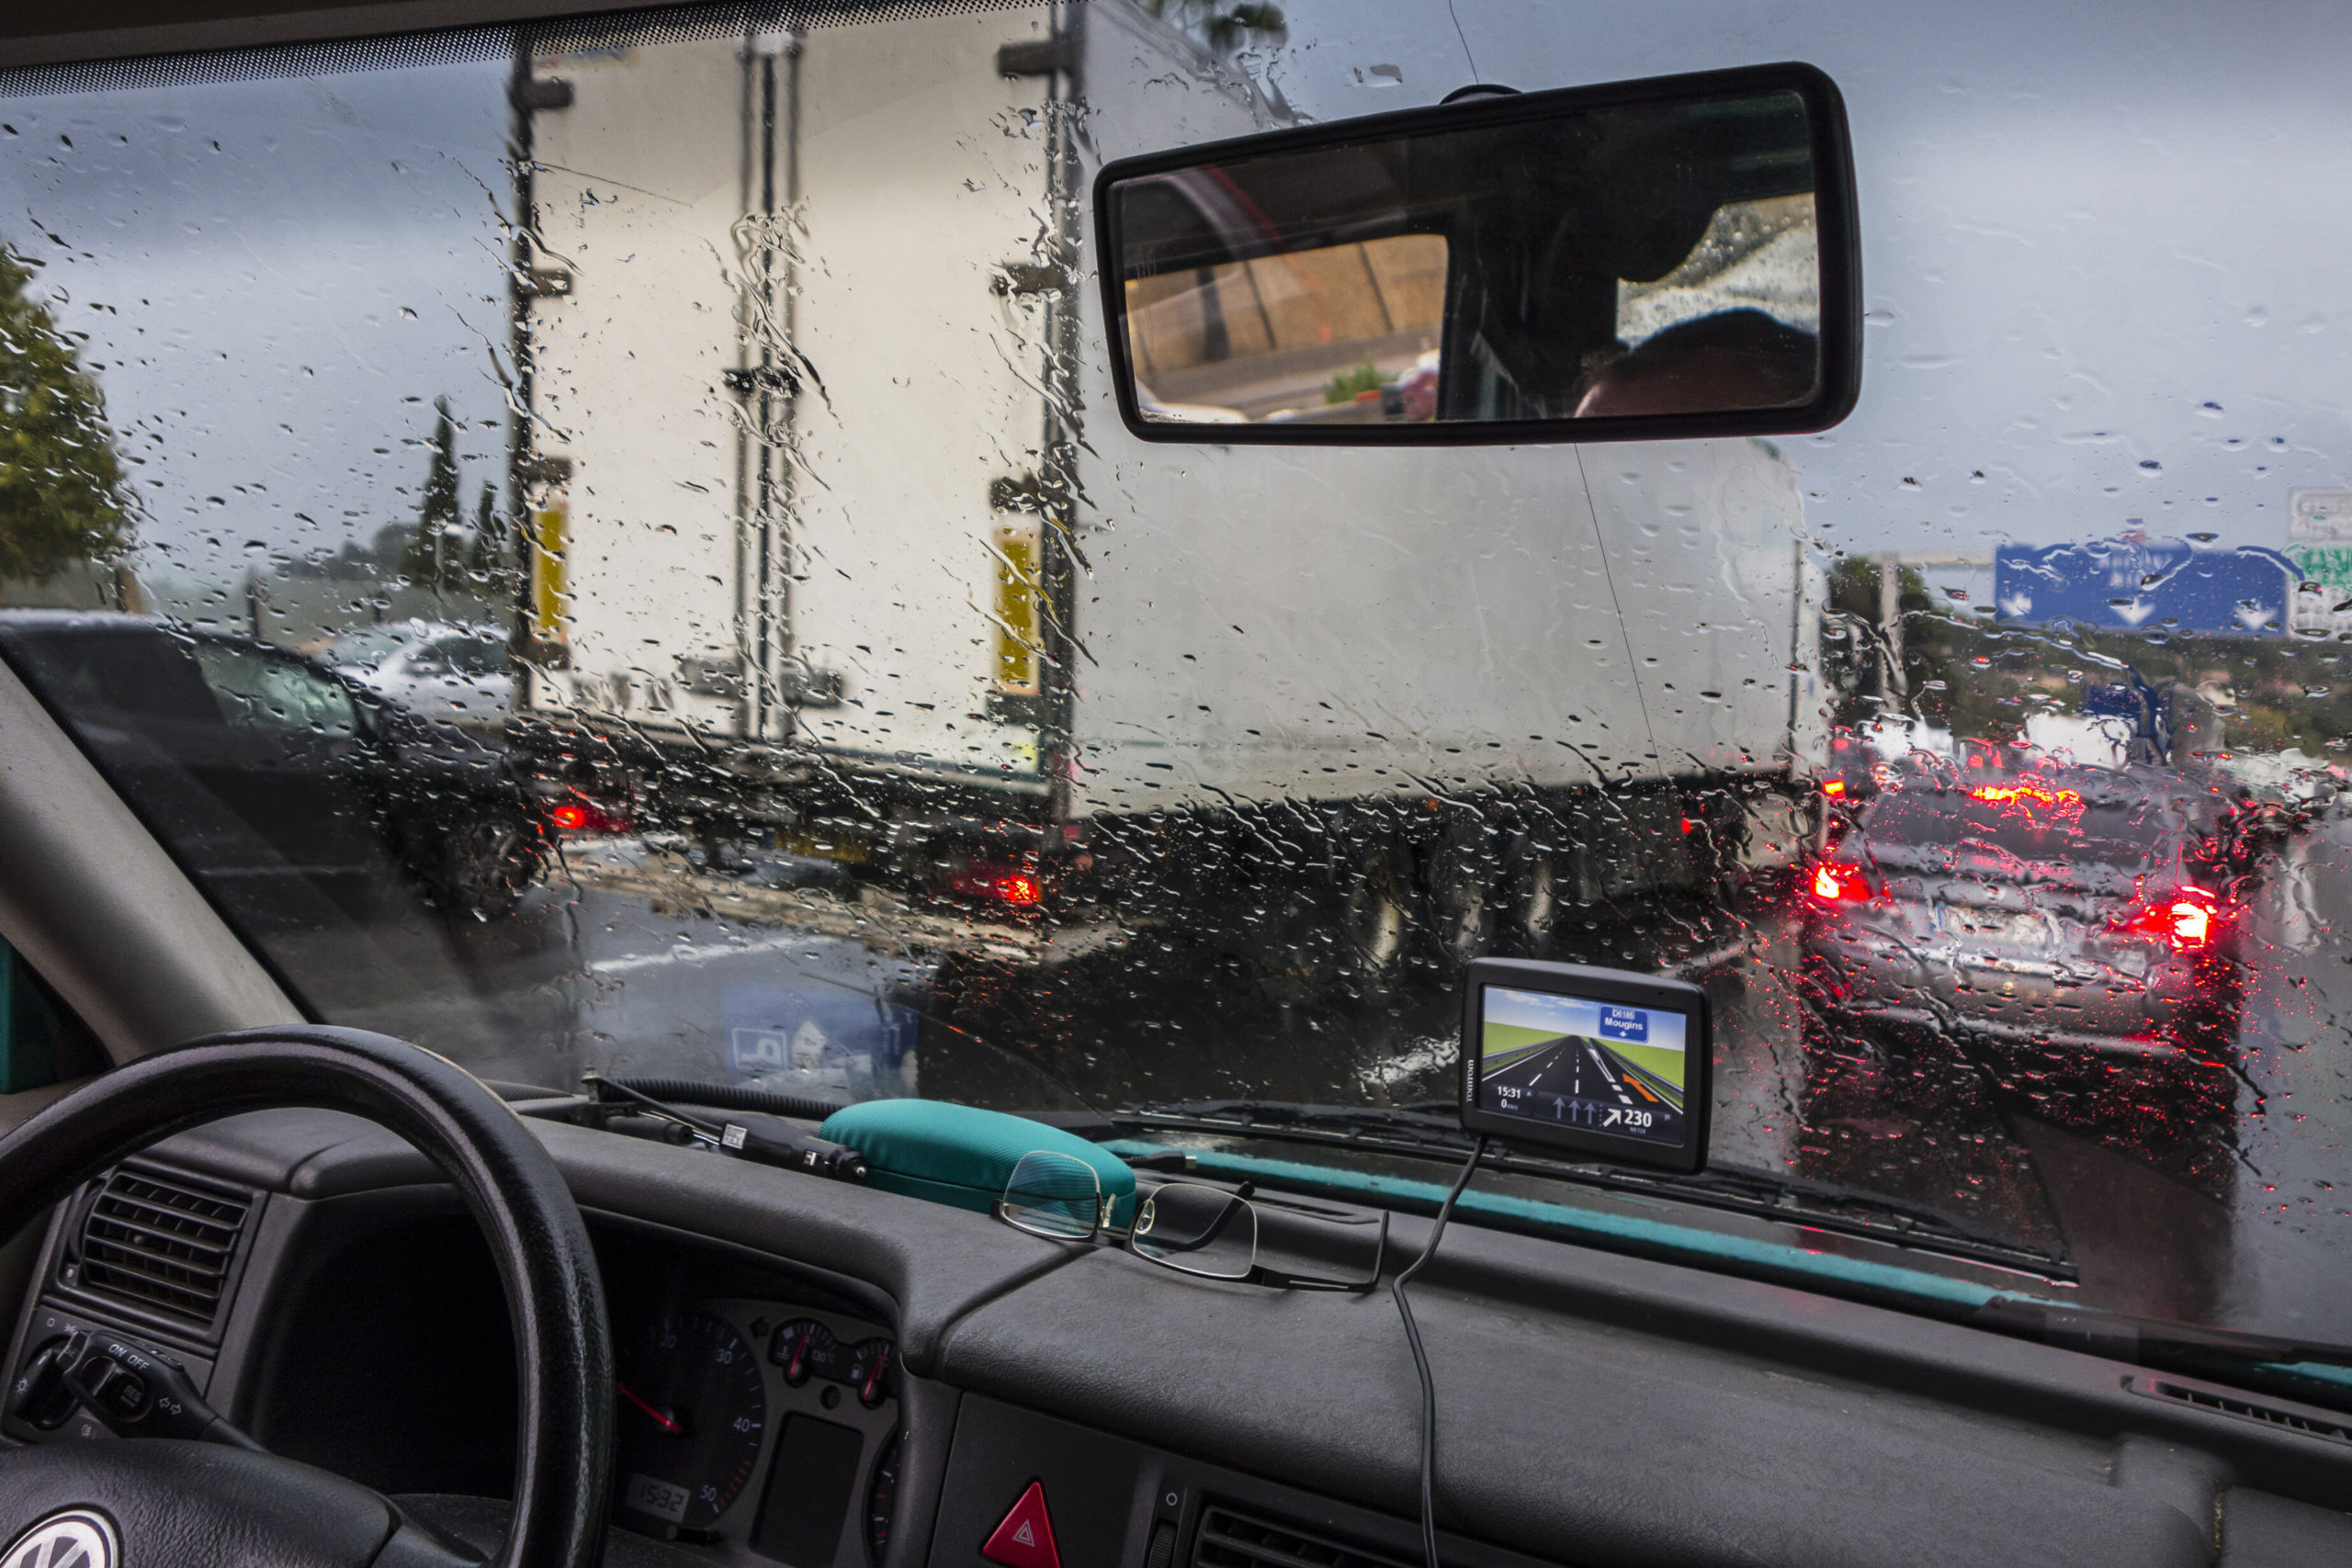 Flanders adds rain sensors to enforce passing restrictions for trucks